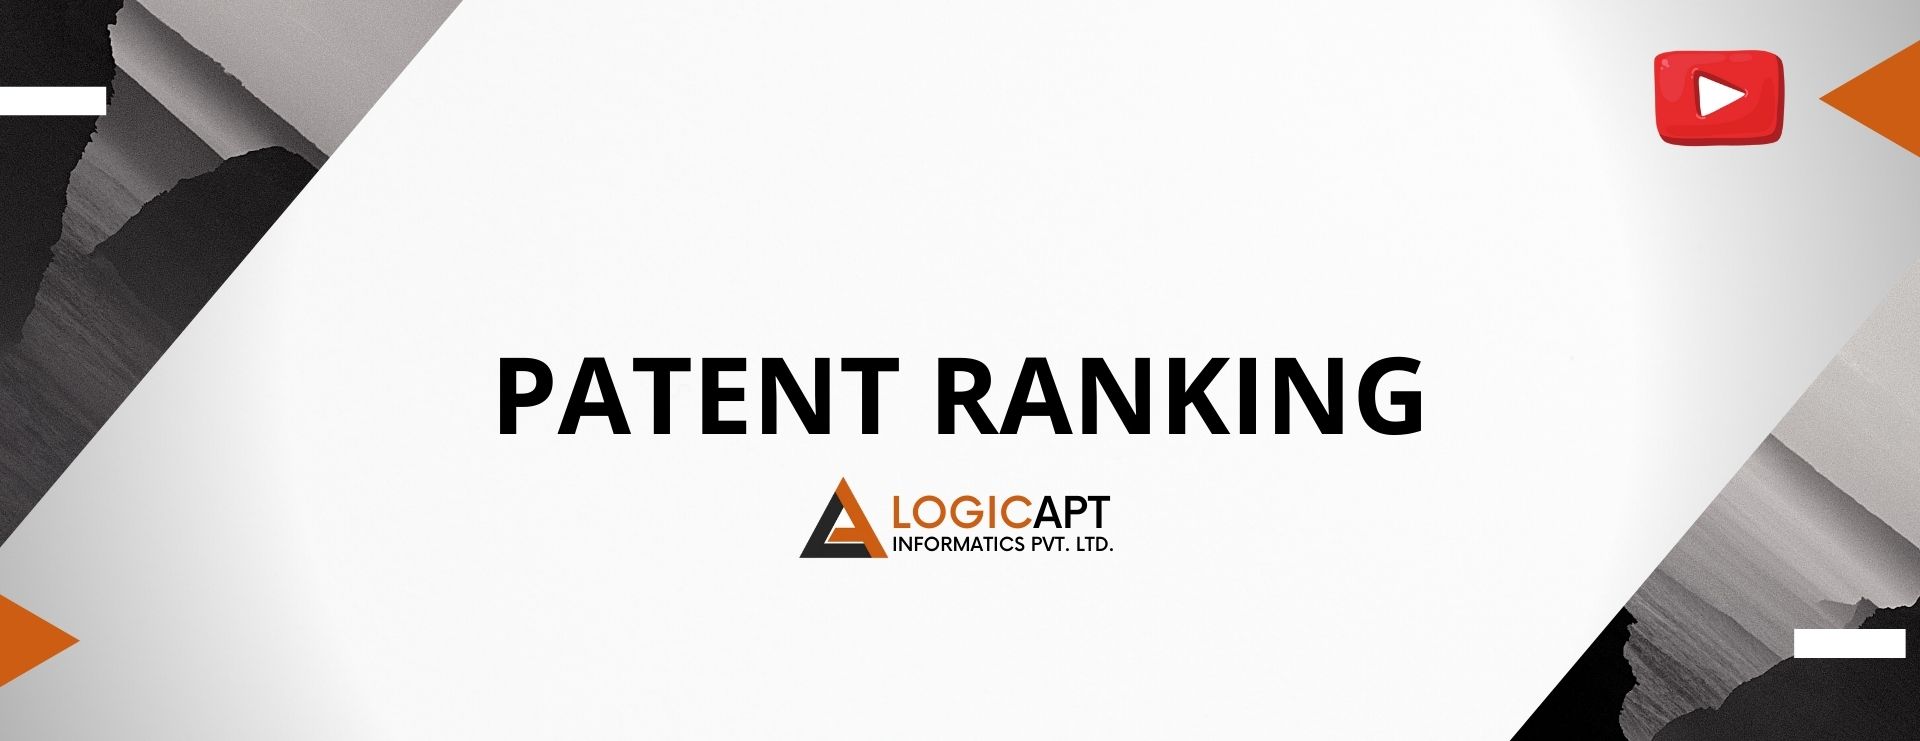 Patent Ranking